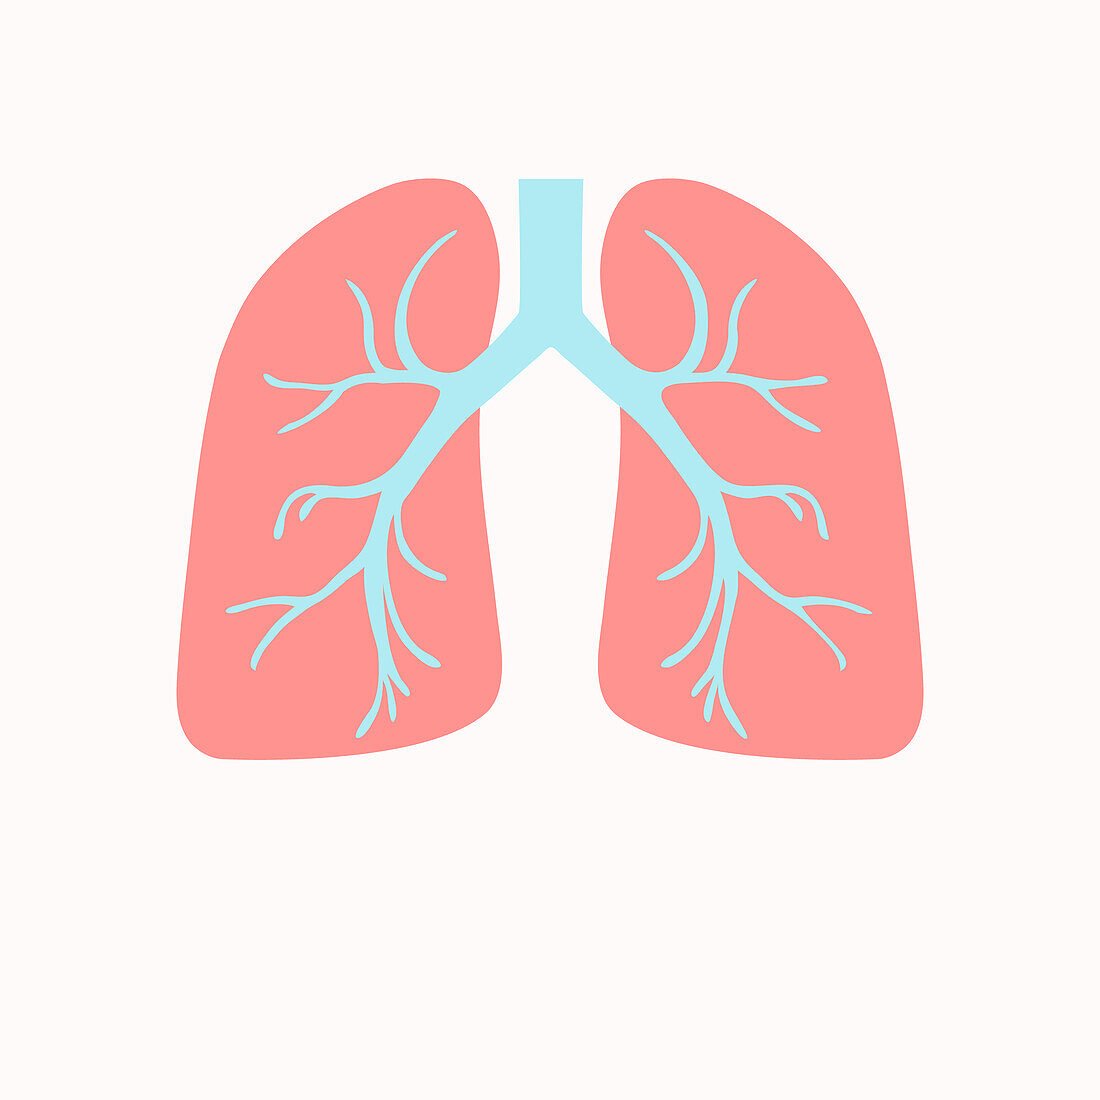 Tuberculosis, conceptual illustration